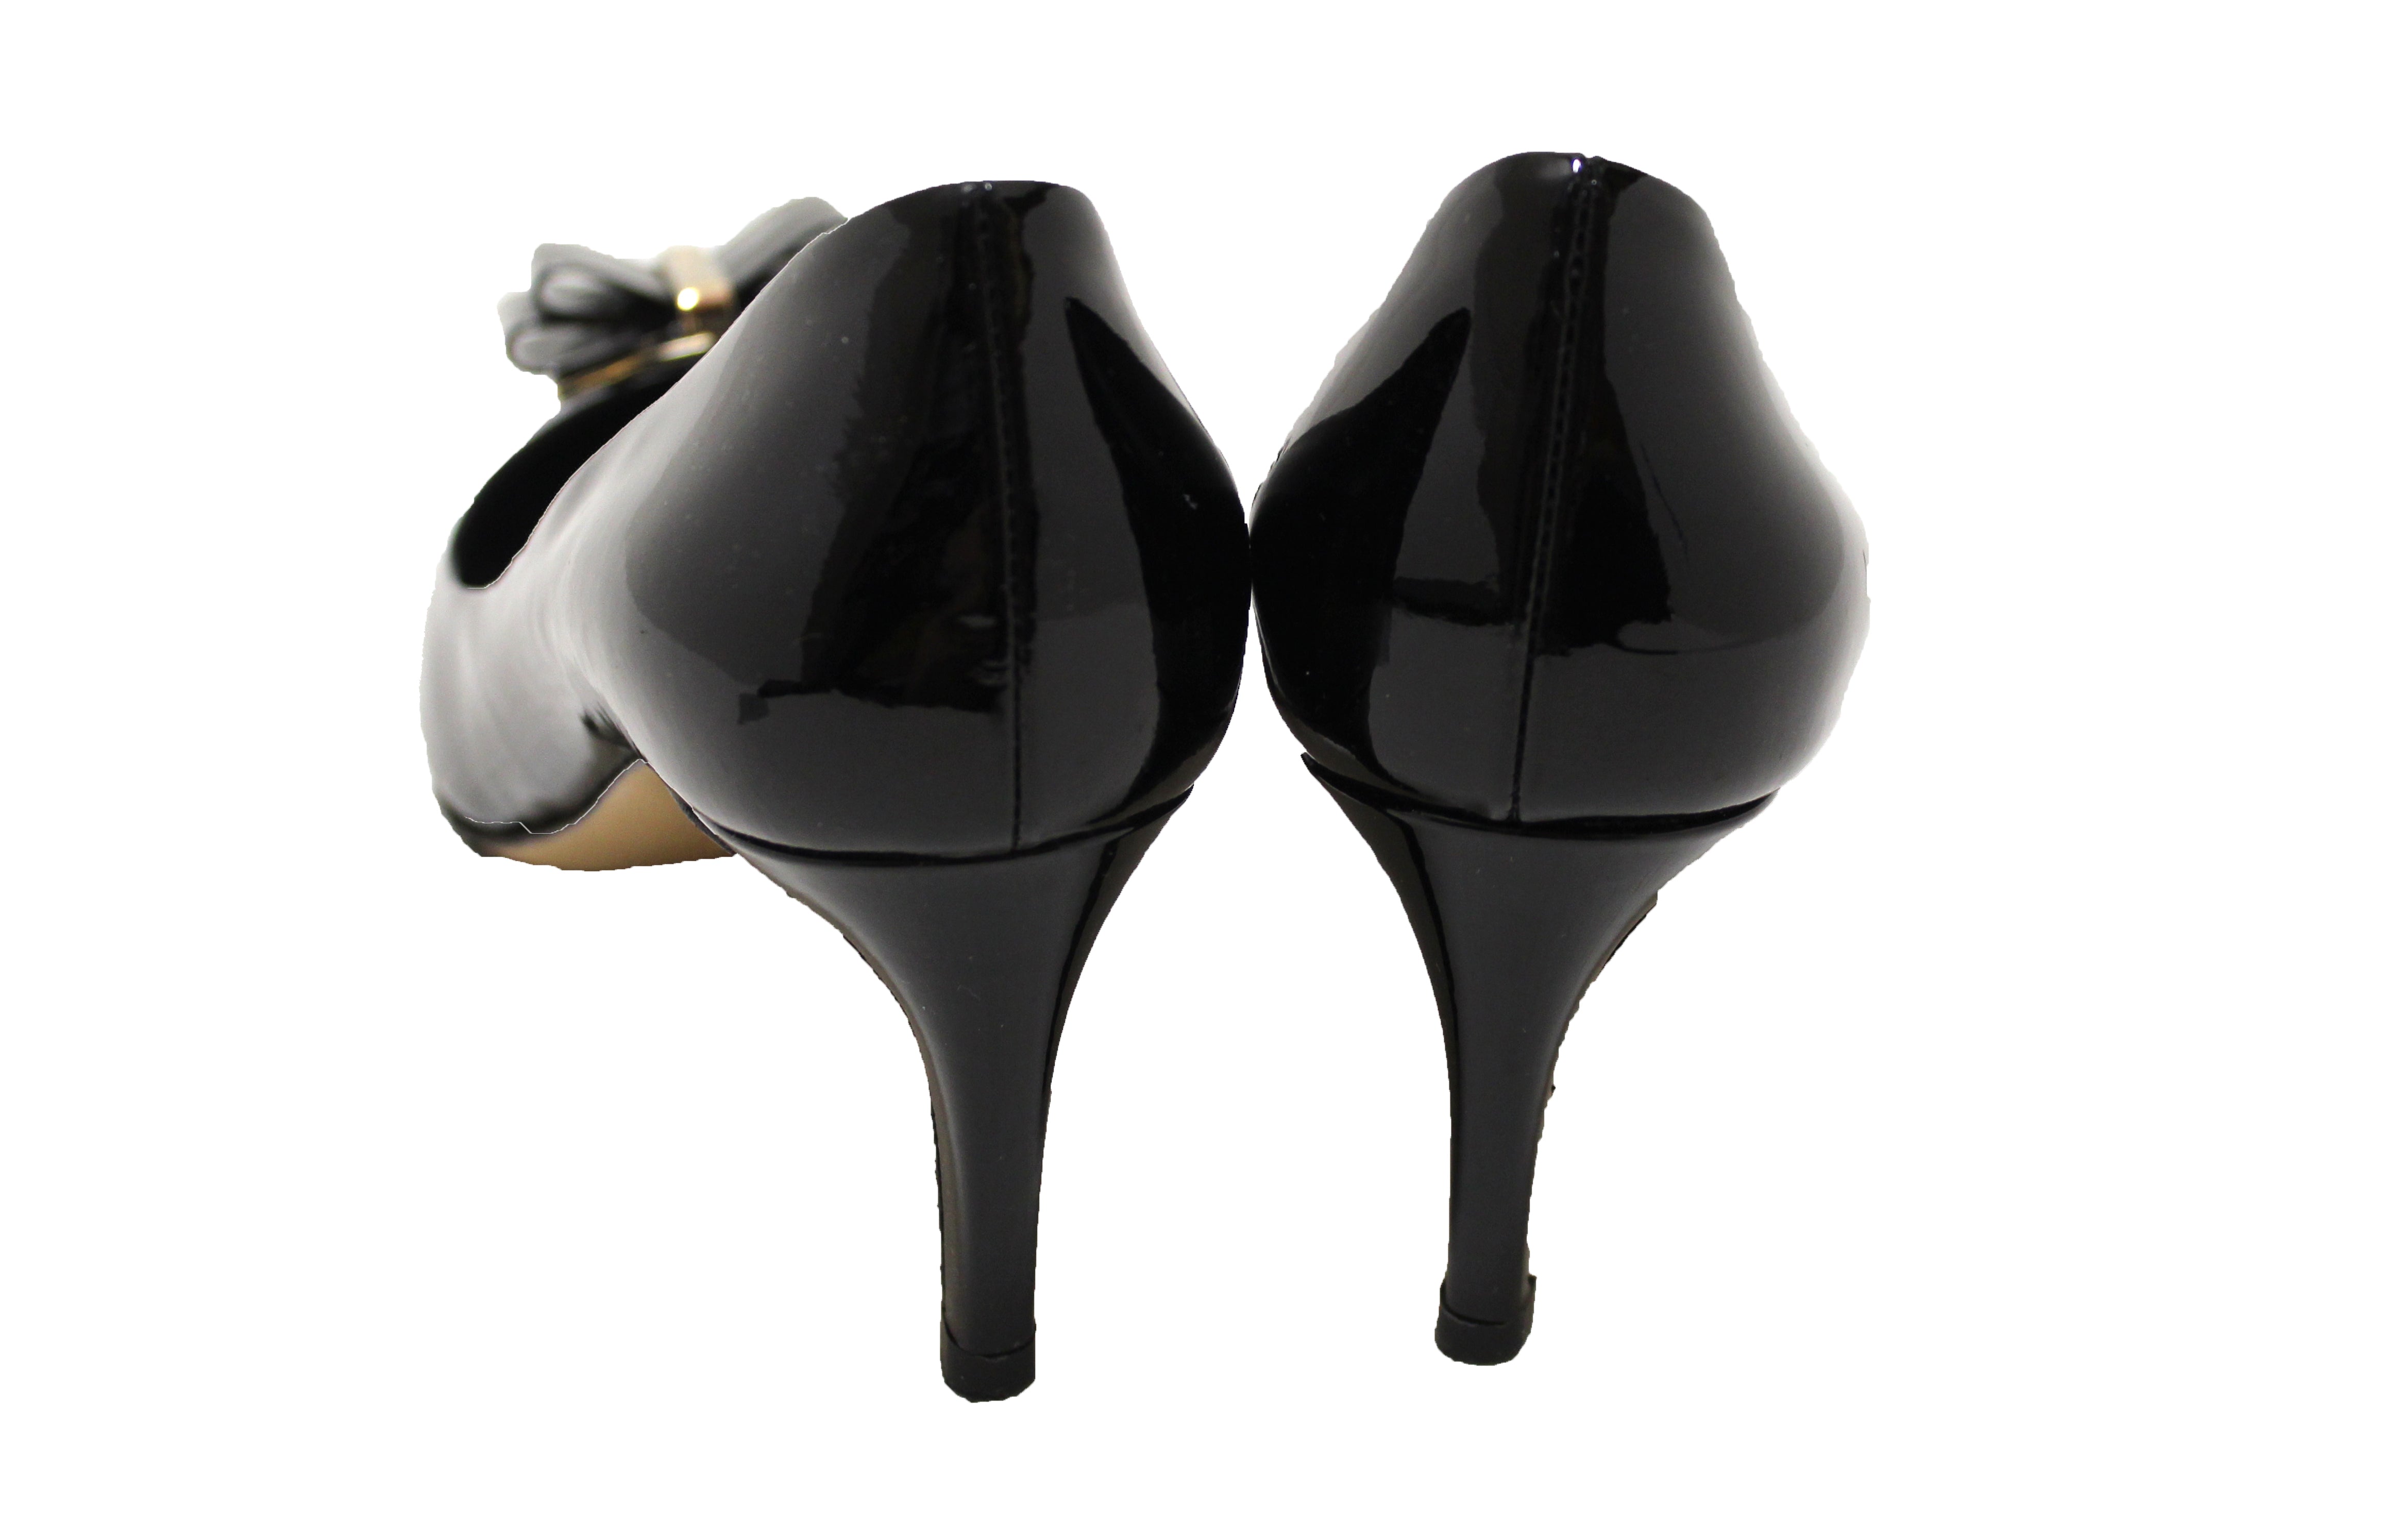 Authentic Salvatore Ferragamo Black Patent Leather Zeri Pointed Toe Pump Size 7.5